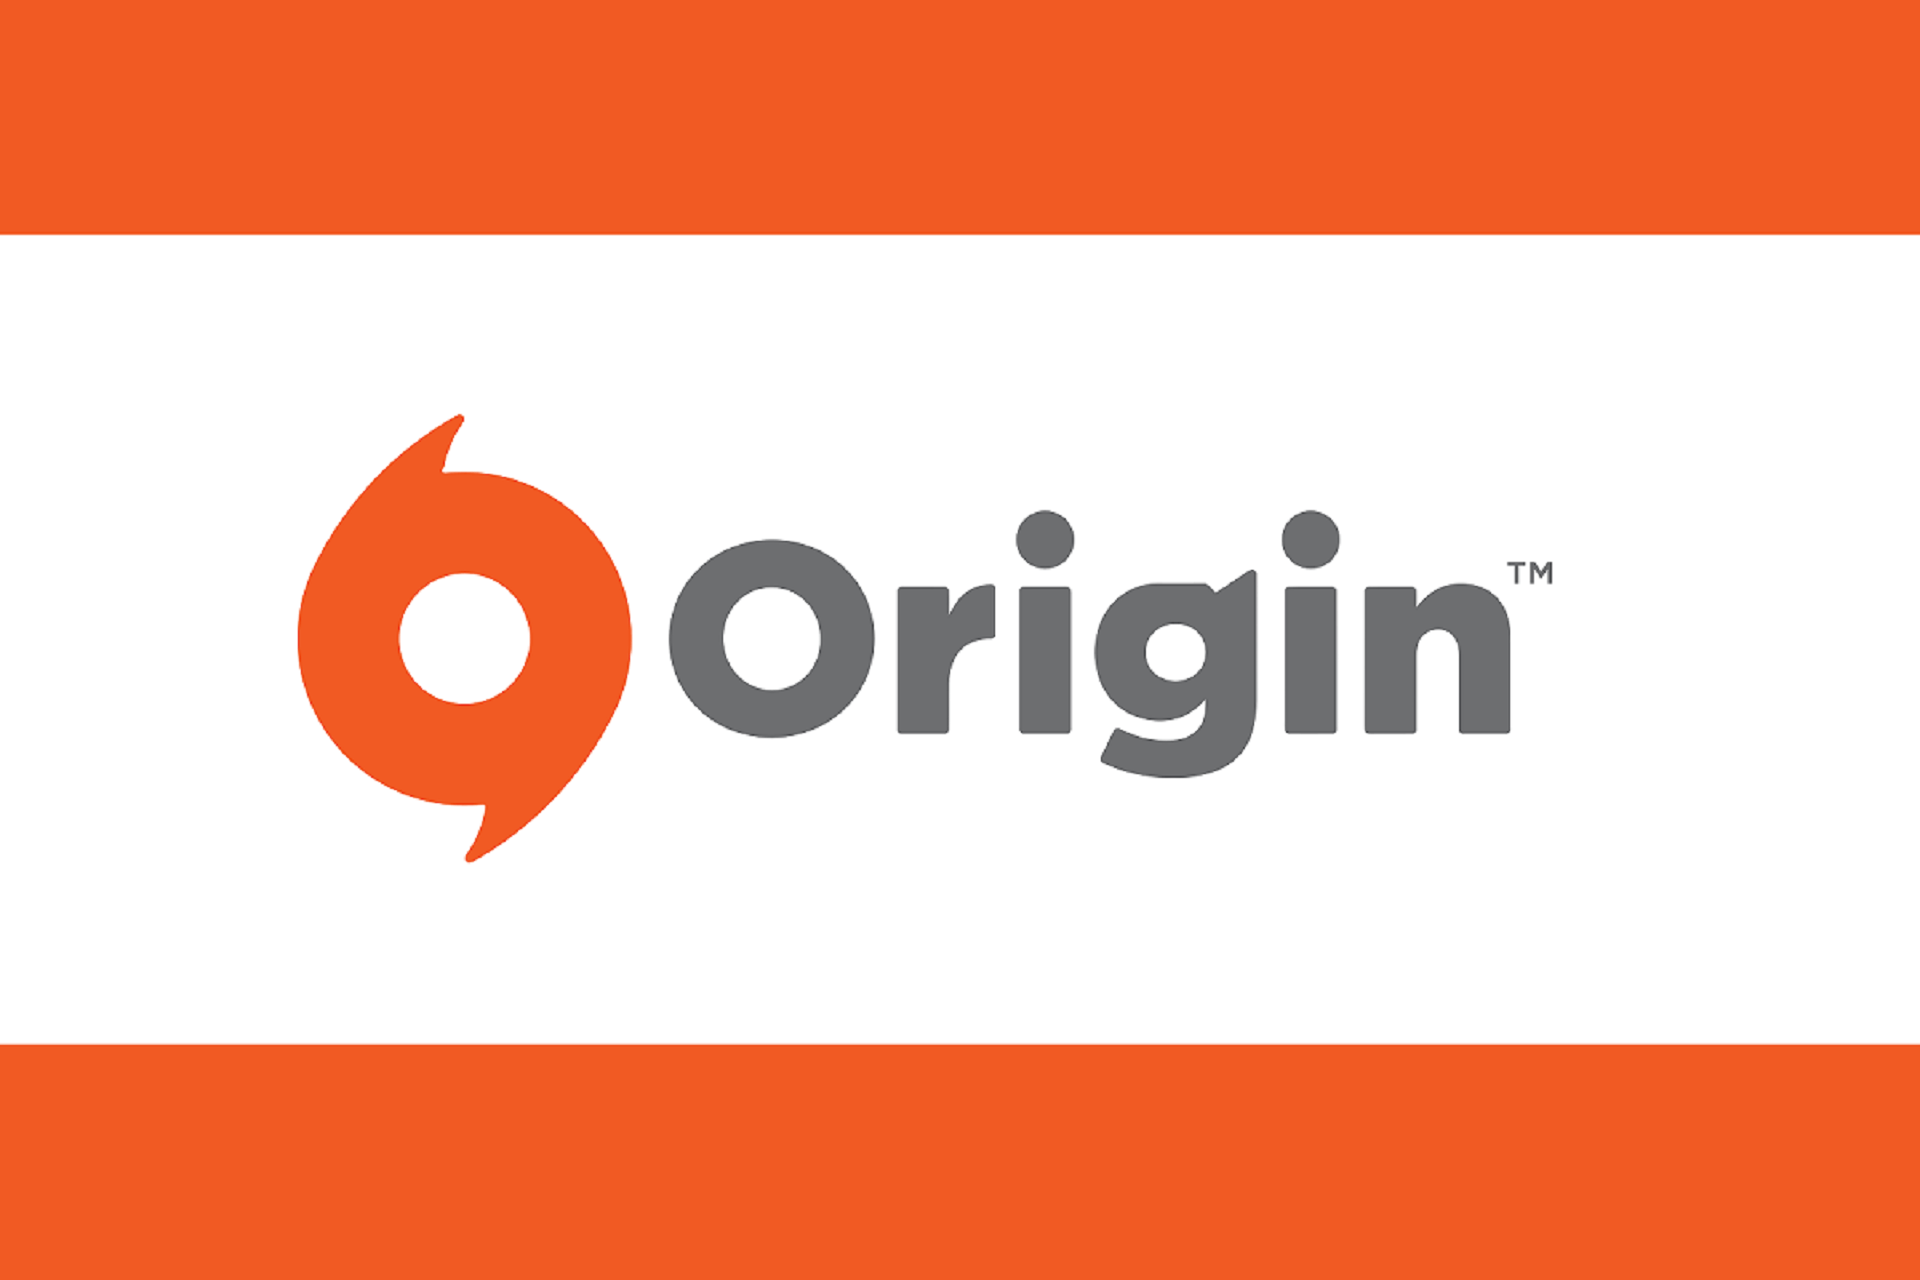 Fix Origin Error while playing games on Windows PC